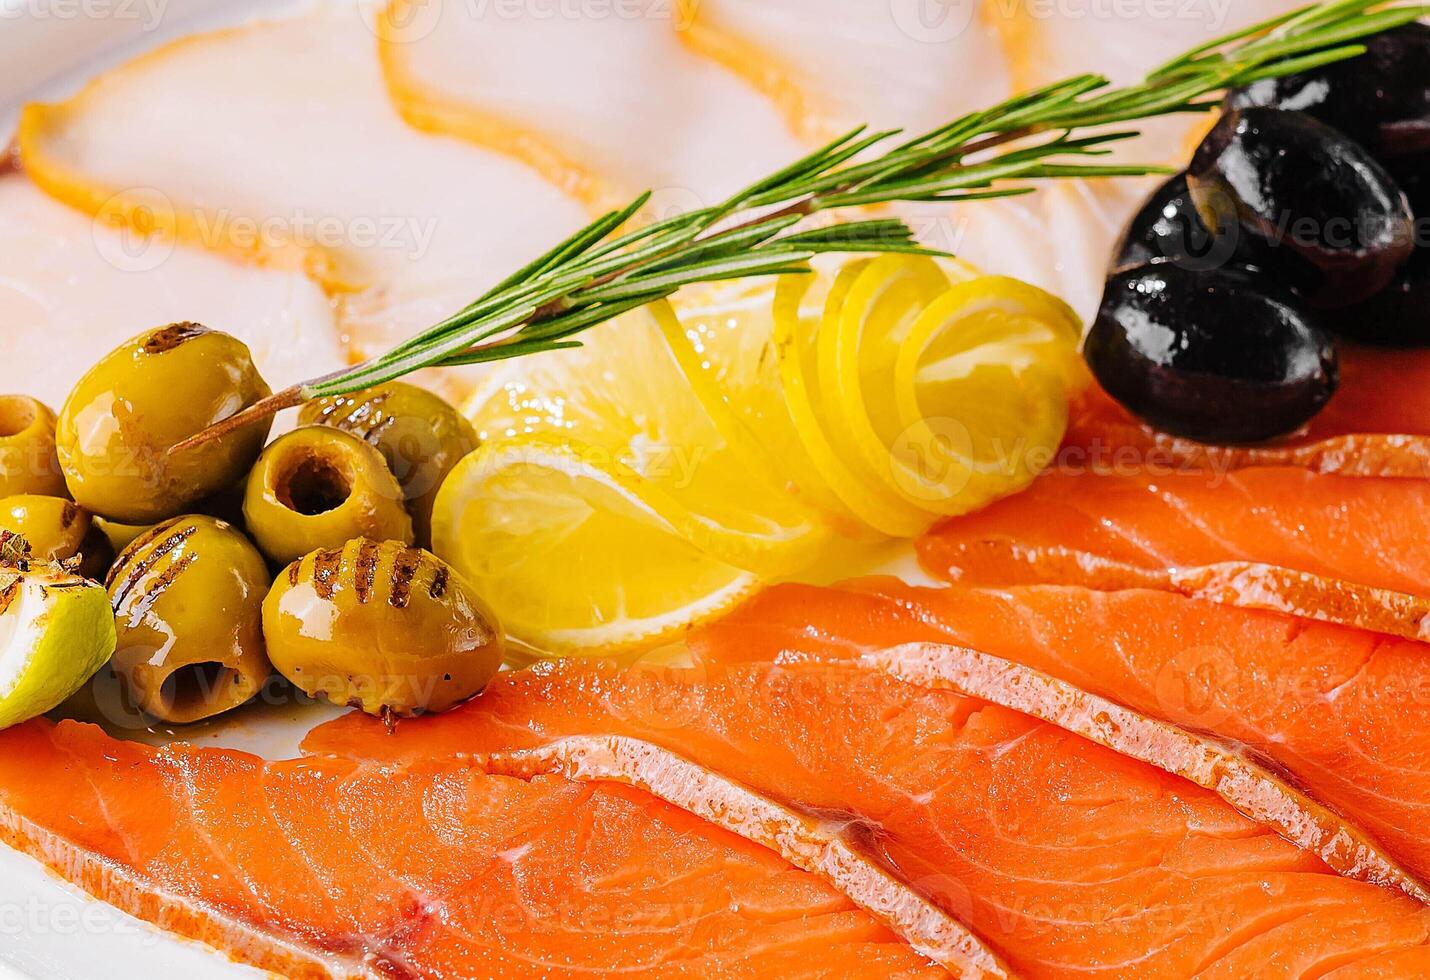 salmon, white fish and olives closeup photo